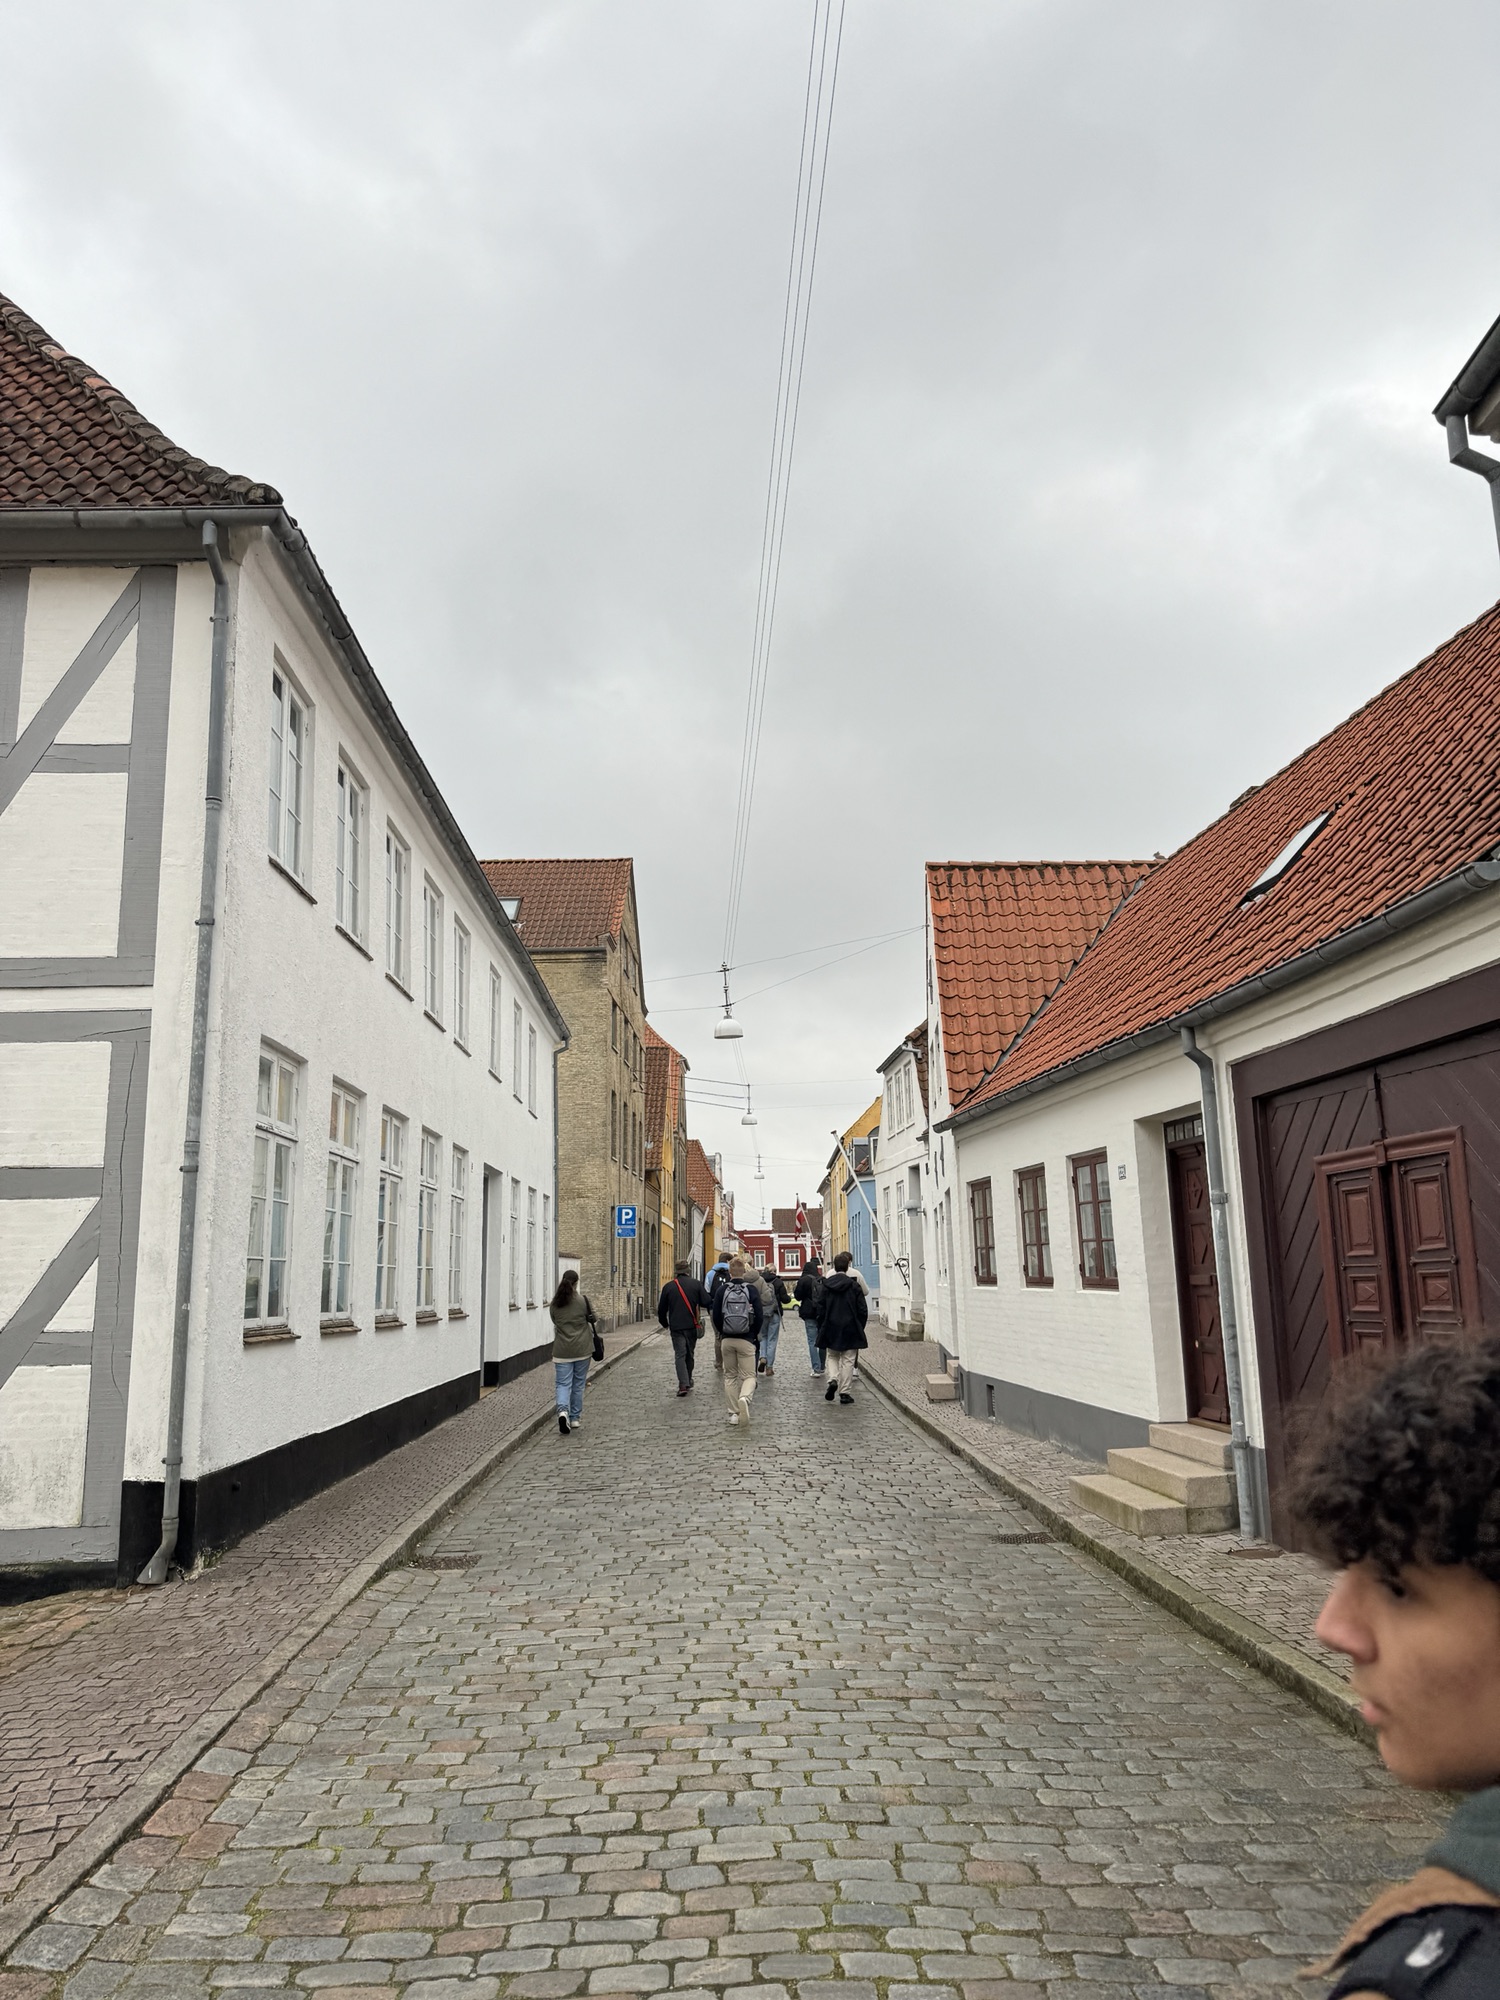 Denmark – A Day at School